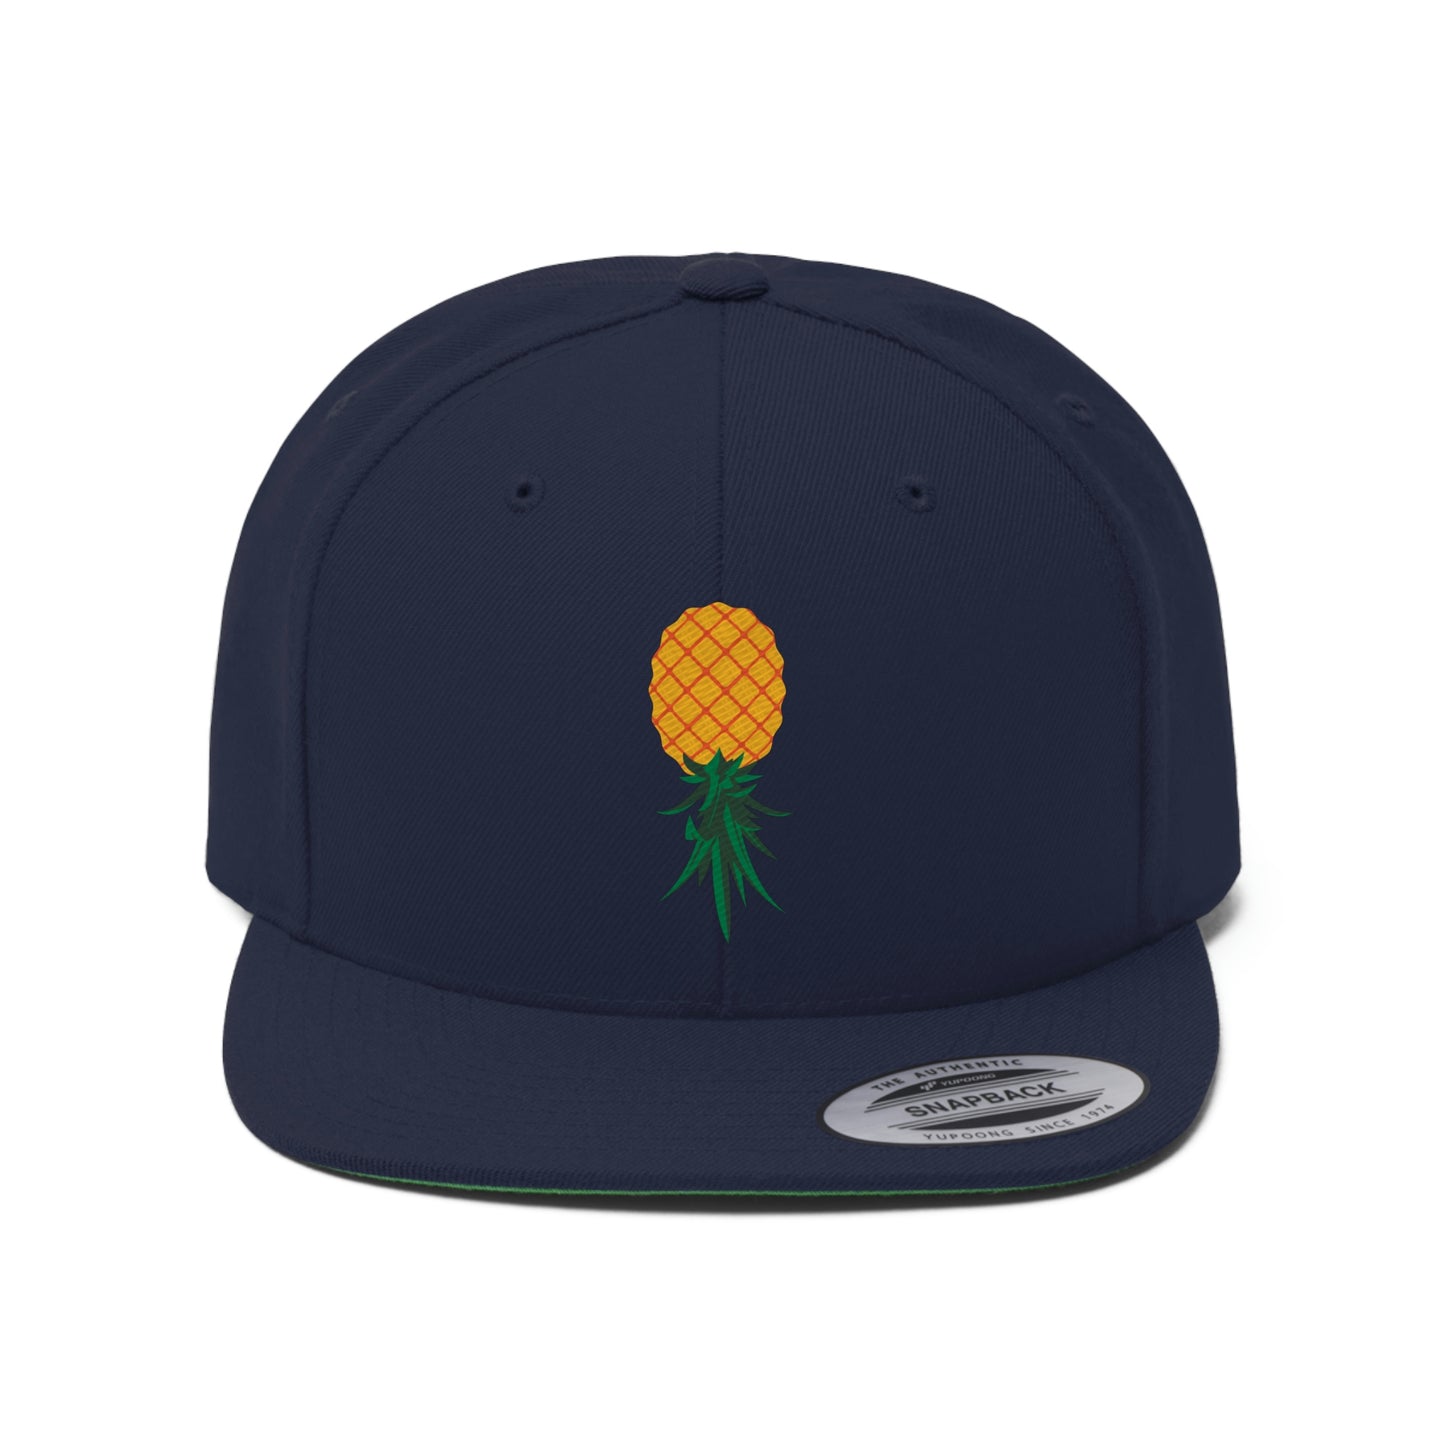 Upside Down Pineapple, Why Not–Unisex Flat Bill Hat